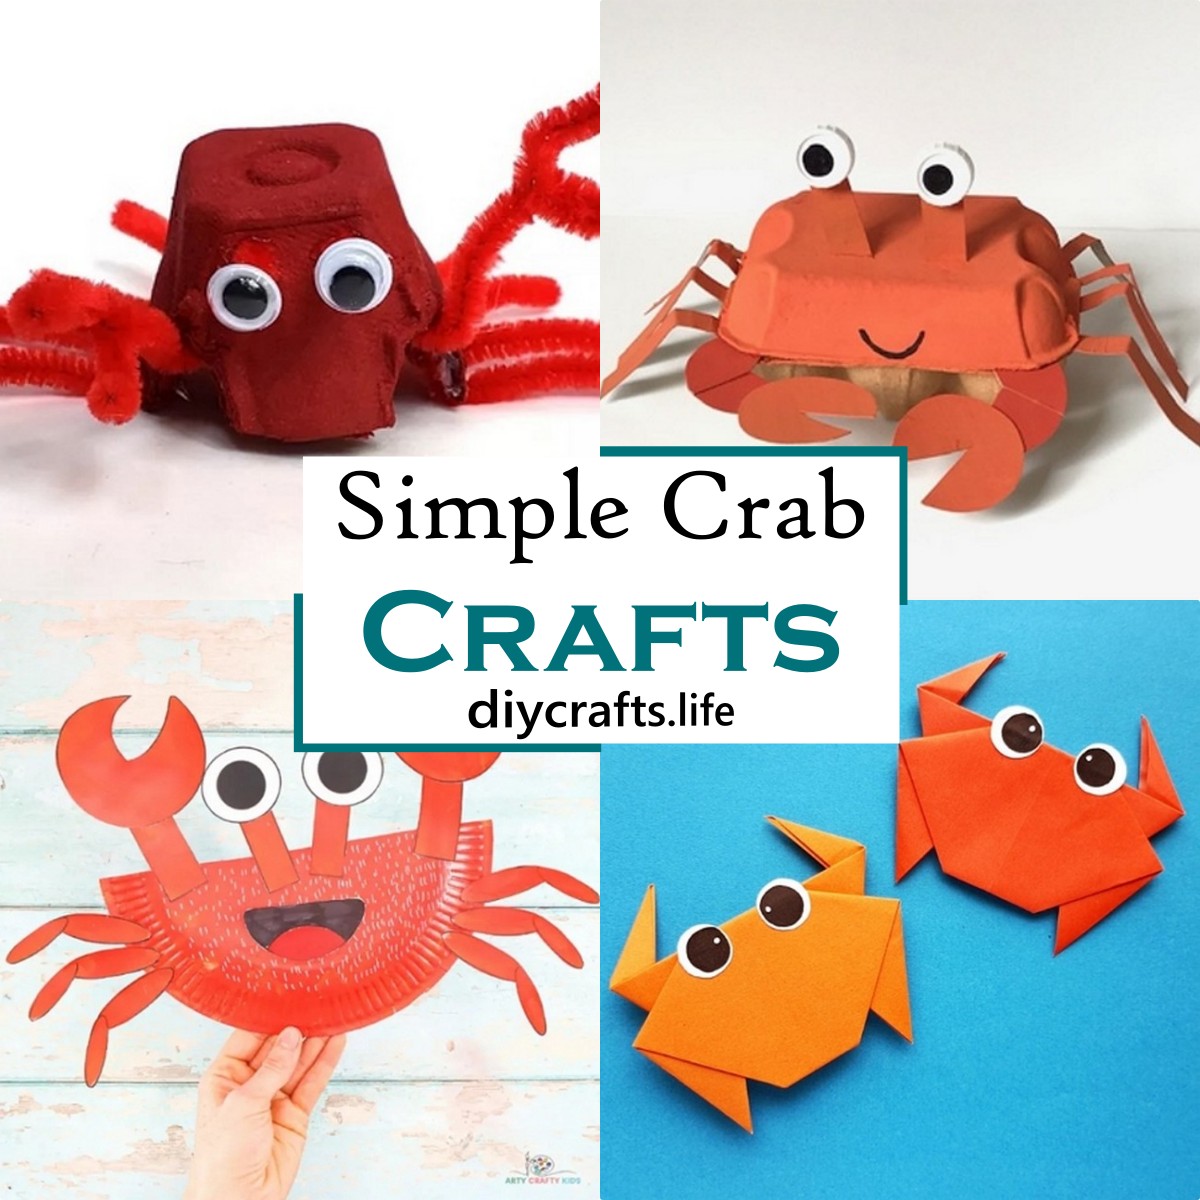 crab craft template